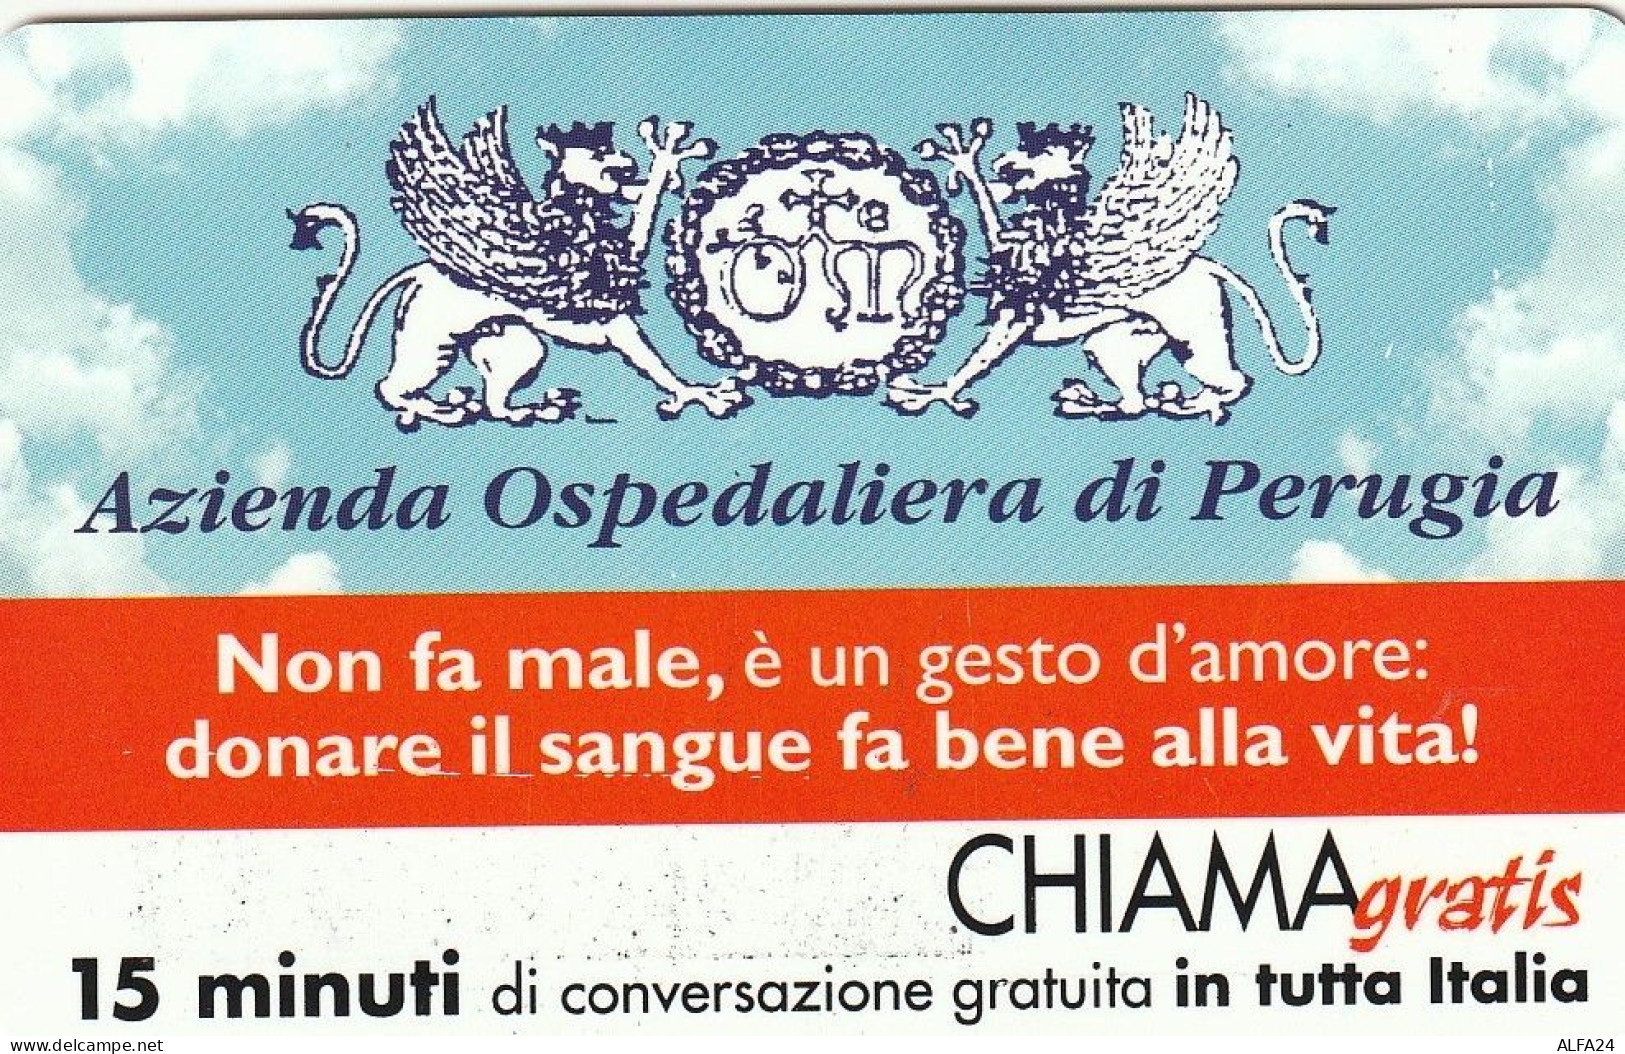 CHIAMAGRATIS MASTER/PROTOTIPO 243 AZ OSPED PERUGIA  (CV1730 - Private - Tribute